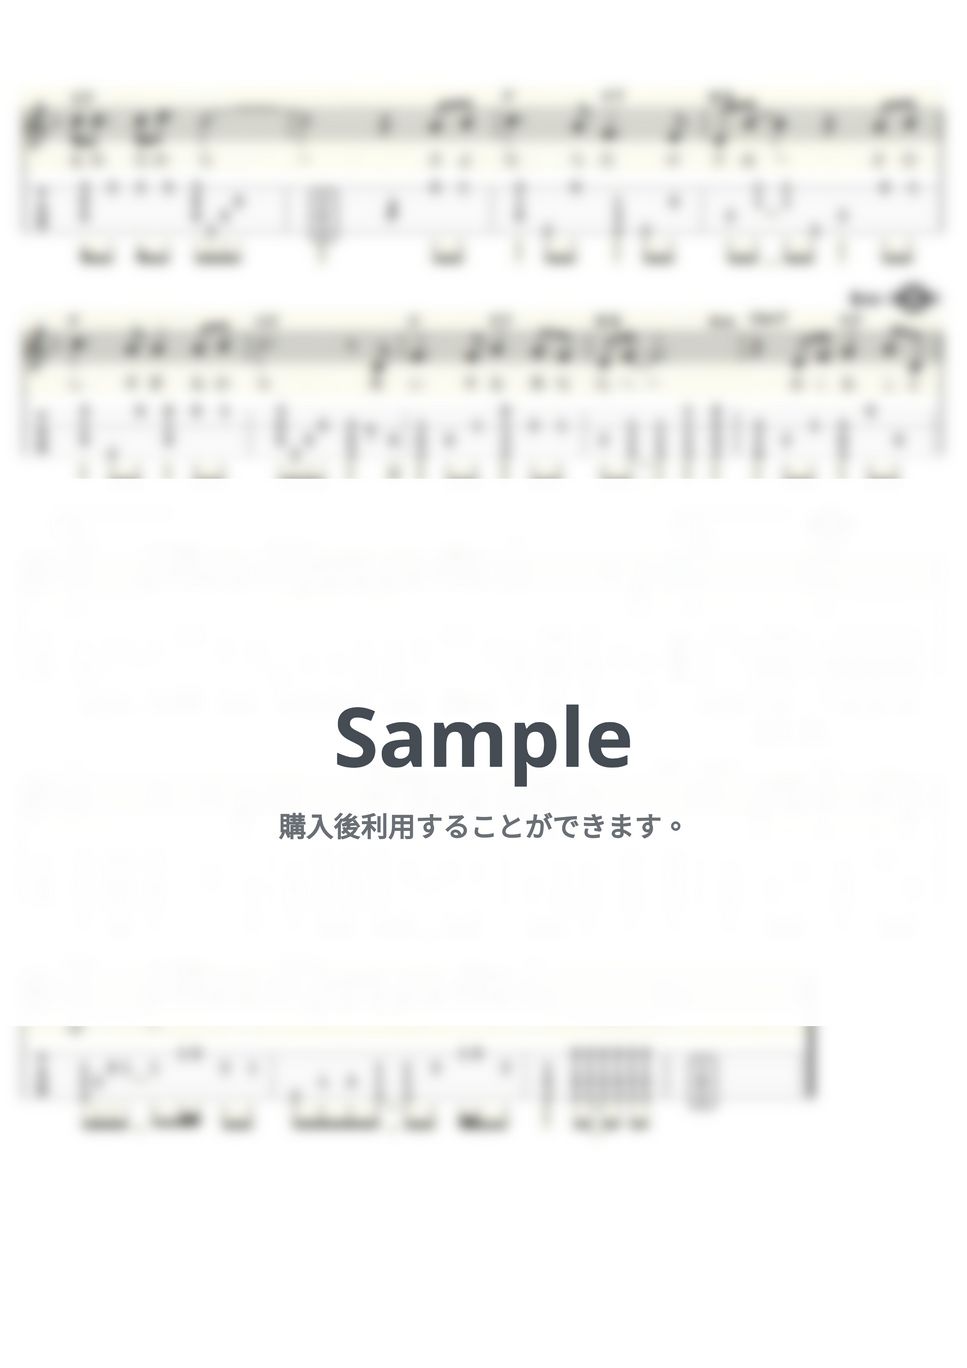 海援隊 - 贈る言葉 (ｳｸﾚﾚｿﾛ / Low-G / 中級) by ukulelepapa